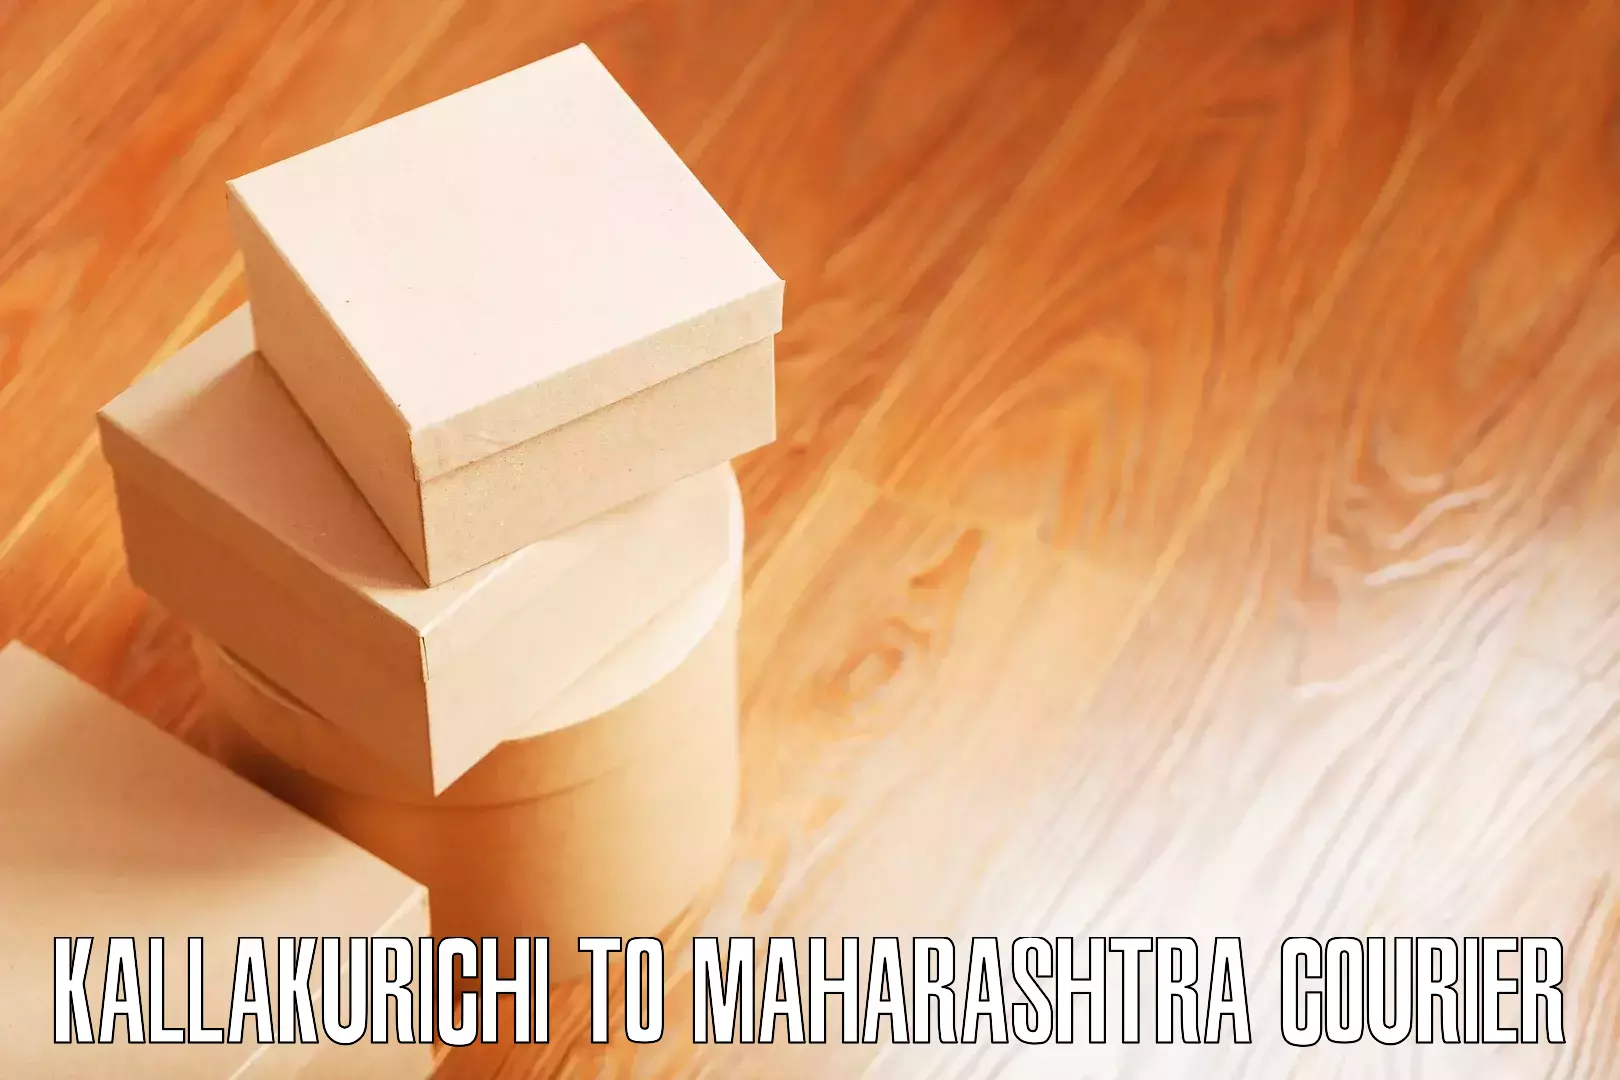 Professional moving company Kallakurichi to Chembur